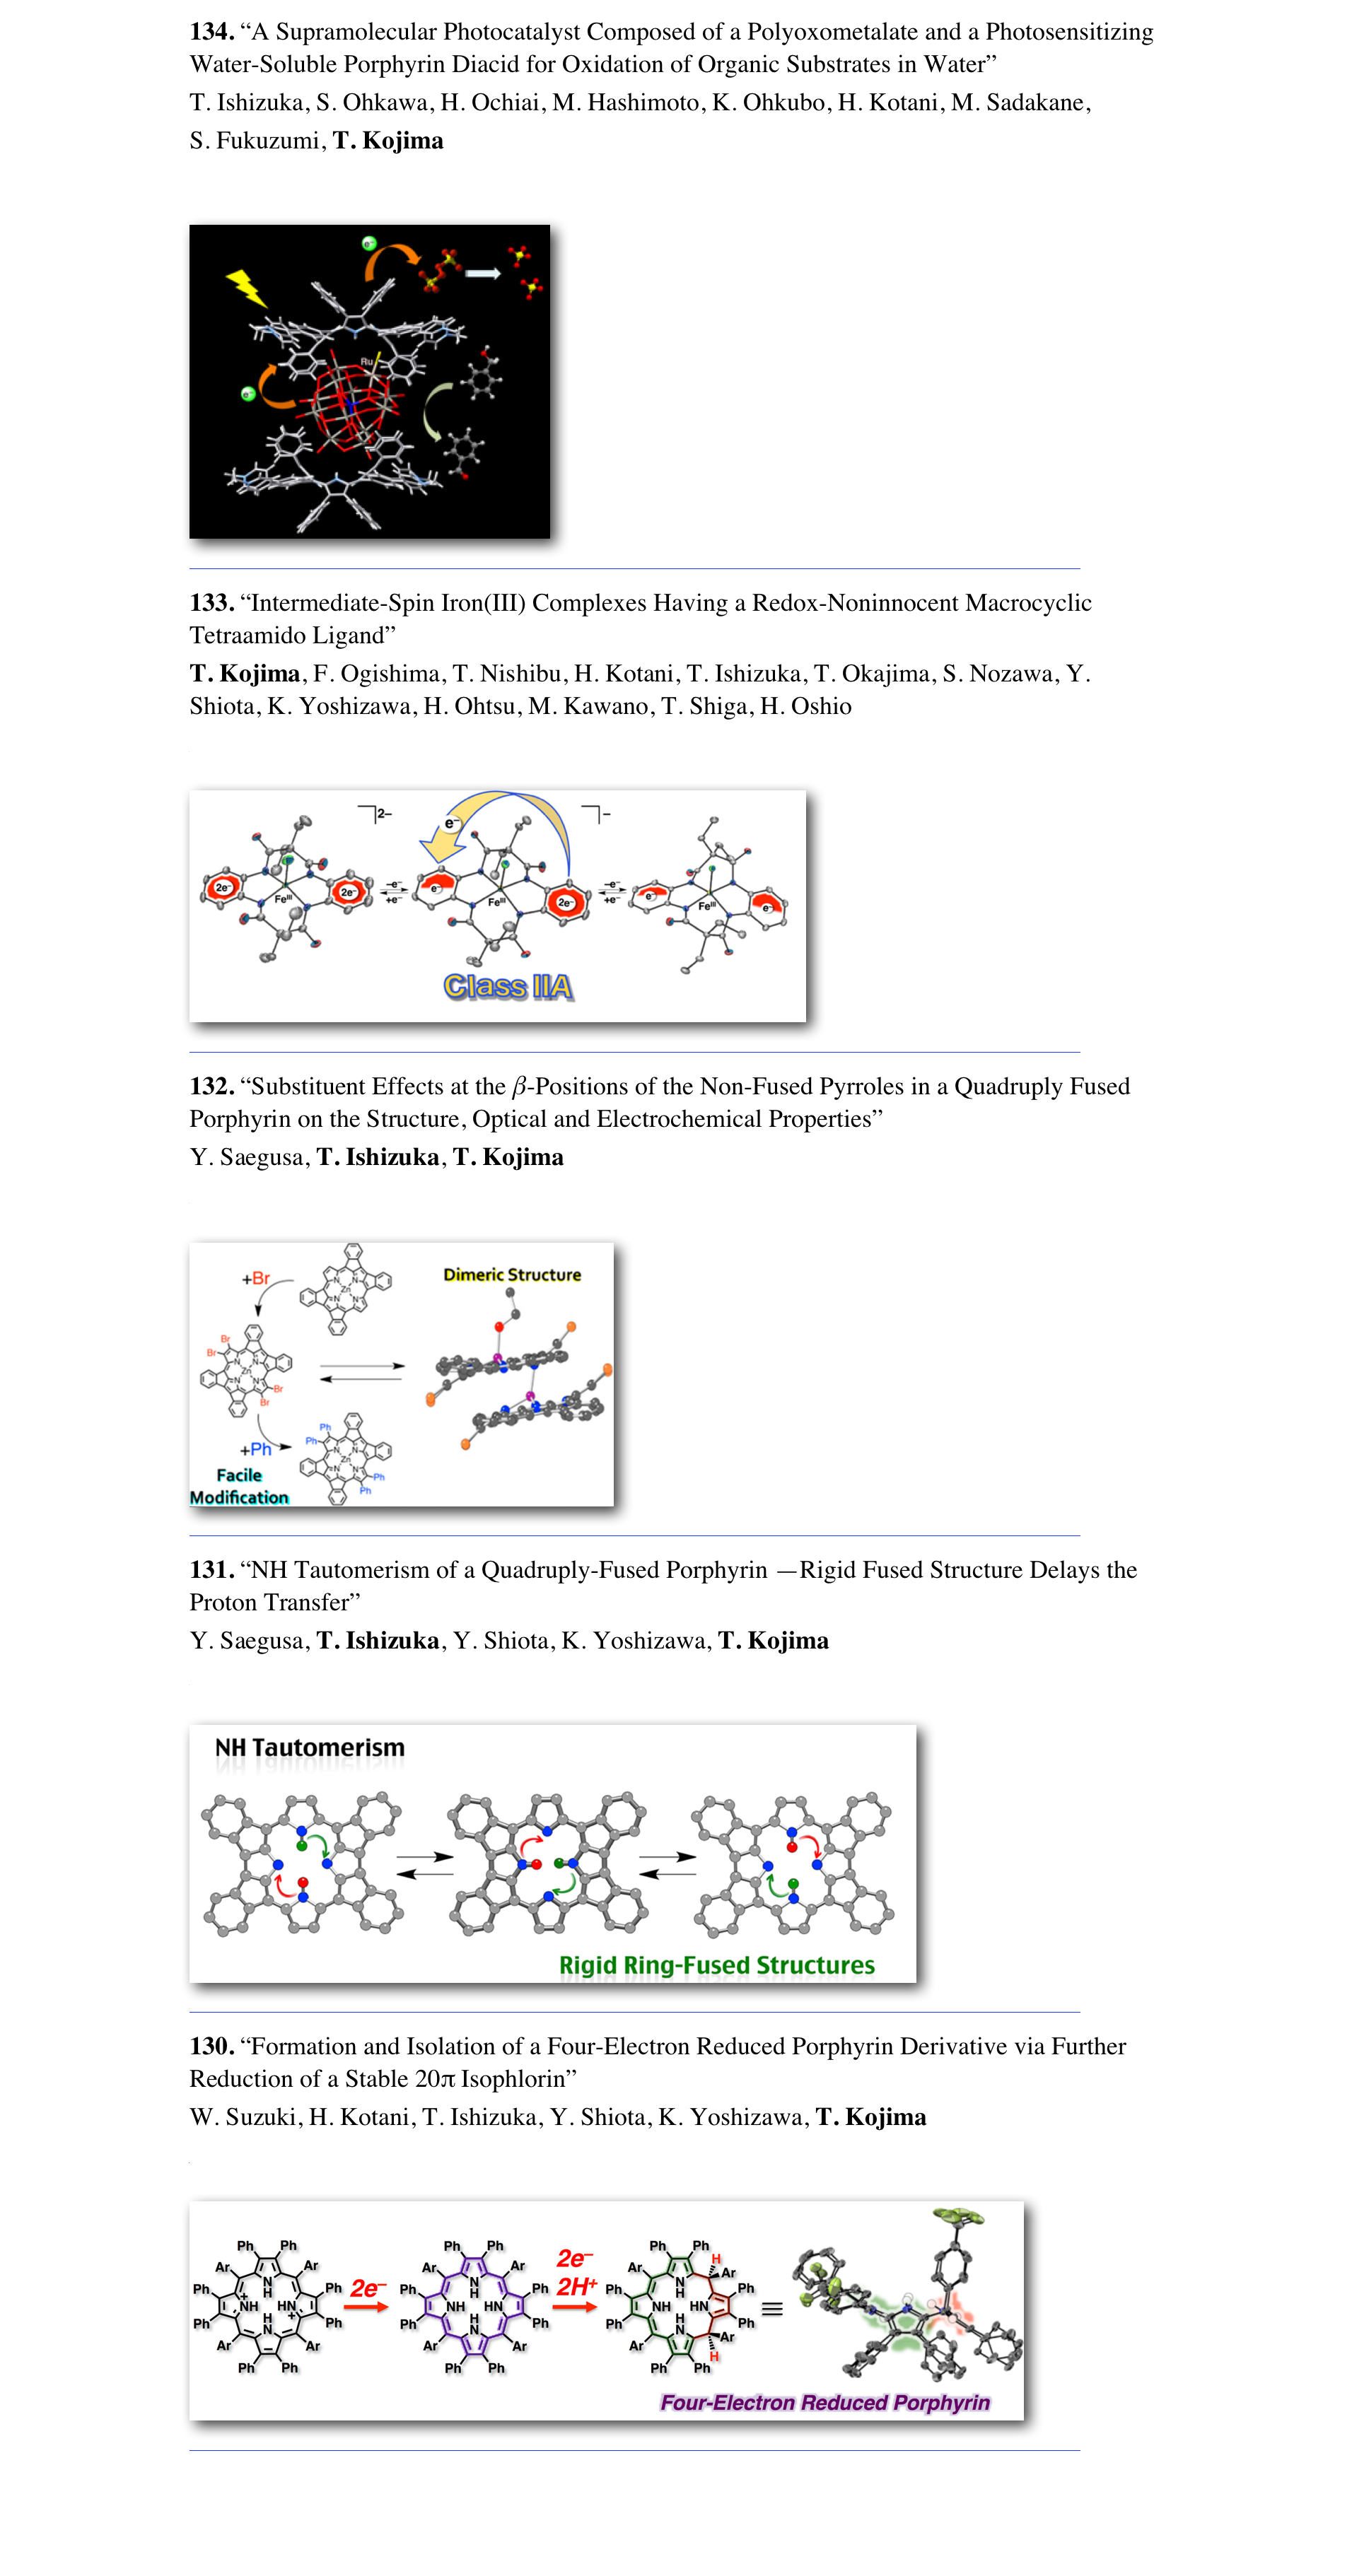 134. “A Supramolecular Photocatalyst Composed of a Polyoxometalate and a Photosensitizing Water-Soluble Porphyrin Diacid for Oxidation of Organic Substrates in Water” 
T. Ishizuka, S. Ohkawa, H. Ochiai, M. Hashimoto, K. Ohkubo, H. Kotani, M. Sadakane,  
S. Fukuzumi, T. Kojima 
Green. Chem. 2018, 20(9), 1975-1980.

￼
　　　　　　　　　　　　　　　　　　　　　　　　　　　　　　　　　　　
133. “Intermediate-Spin Iron(III) Complexes Having a Redox-Noninnocent Macrocyclic Tetraamido Ligand” 
T. Kojima, F. Ogishima, T. Nishibu, H. Kotani, T. Ishizuka, T. Okajima, S. Nozawa, Y. Shiota, K. Yoshizawa, H. Ohtsu, M. Kawano, T. Shiga, H. Oshio 
Inorg. Chem. 2018, 57(16), 9683–9695.

￼
　　　　　　　　　　　　　　　　　　　　　　　　　　　　　　　　　　　
132. “Substituent Effects at the β-Positions of the Non-Fused Pyrroles in a Quadruply Fused Porphyrin on the Structure, Optical and Electrochemical Properties” 
Y. Saegusa, T. Ishizuka, T. Kojima
Inorg. Chem. 2018, 57(3), 1106–1115.

￼
　　　　　　　　　　　　　　　　　　　　　　　　　　　　　　　　　　　
131. “NH Tautomerism of a Quadruply-Fused Porphyrin —Rigid Fused Structure Delays the Proton Transfer” 
Y. Saegusa, T. Ishizuka, Y. Shiota, K. Yoshizawa, T. Kojima
J. Phys. Chem. B. 2018, 122(1), 316–327.

￼
　　　　　　　　　　　　　　　　　　　　　　　　　　　　　　　　　　　
130. “Formation and Isolation of a Four-Electron Reduced Porphyrin Derivative via Further Reduction of a Stable 20π Isophlorin” 
W. Suzuki, H. Kotani, T. Ishizuka, Y. Shiota, K. Yoshizawa, T. Kojima
Angew. Chem. Int. Ed. 2018, 57(7), 1973–1977.

￼
　　　　　　　　　　　　　　　　　　　　　　　　　　　　　　　　　　　


